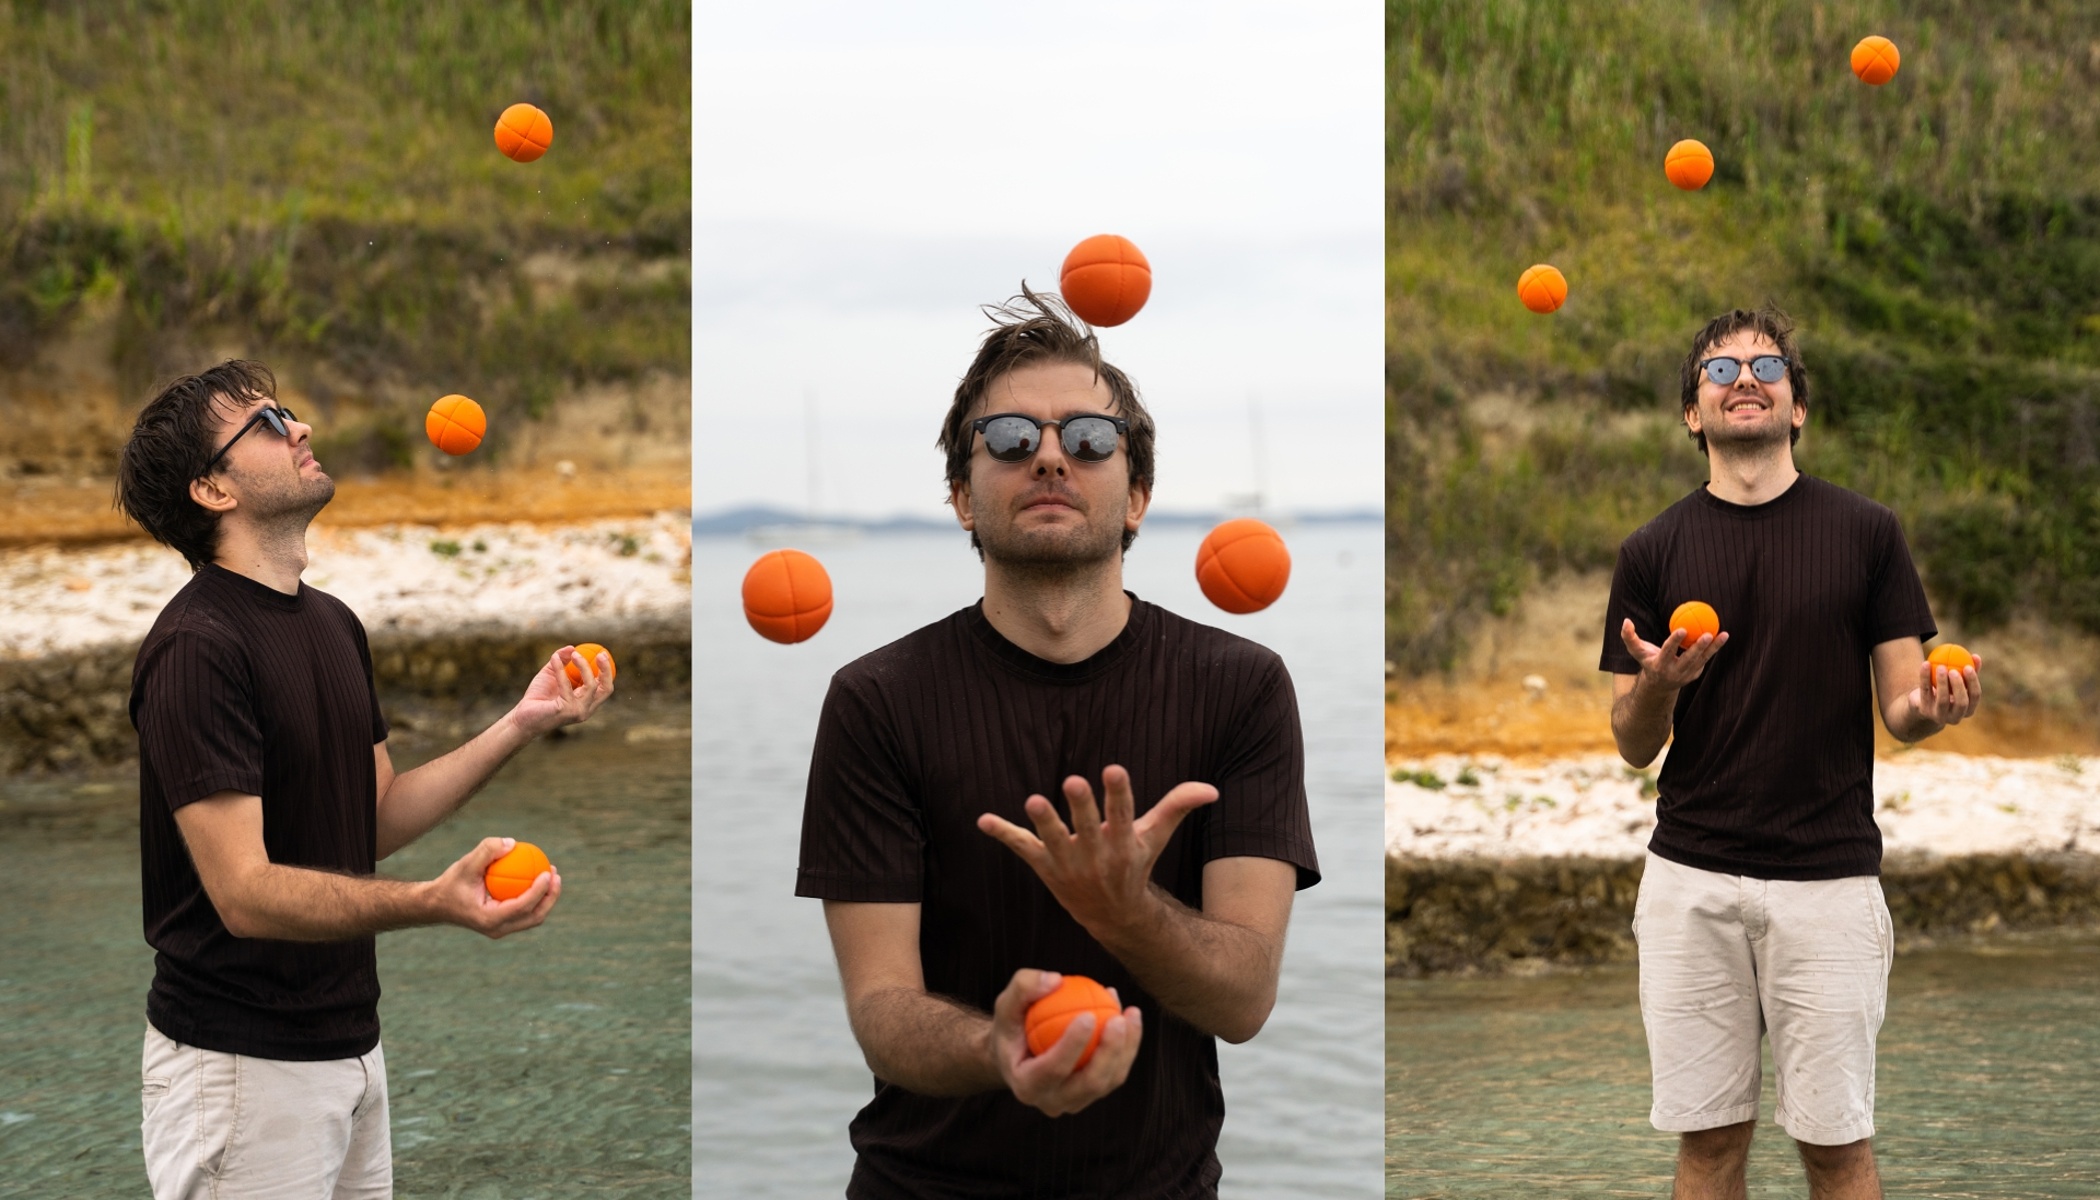 Porträt in Bewegung: Jonglieren mit Bällen